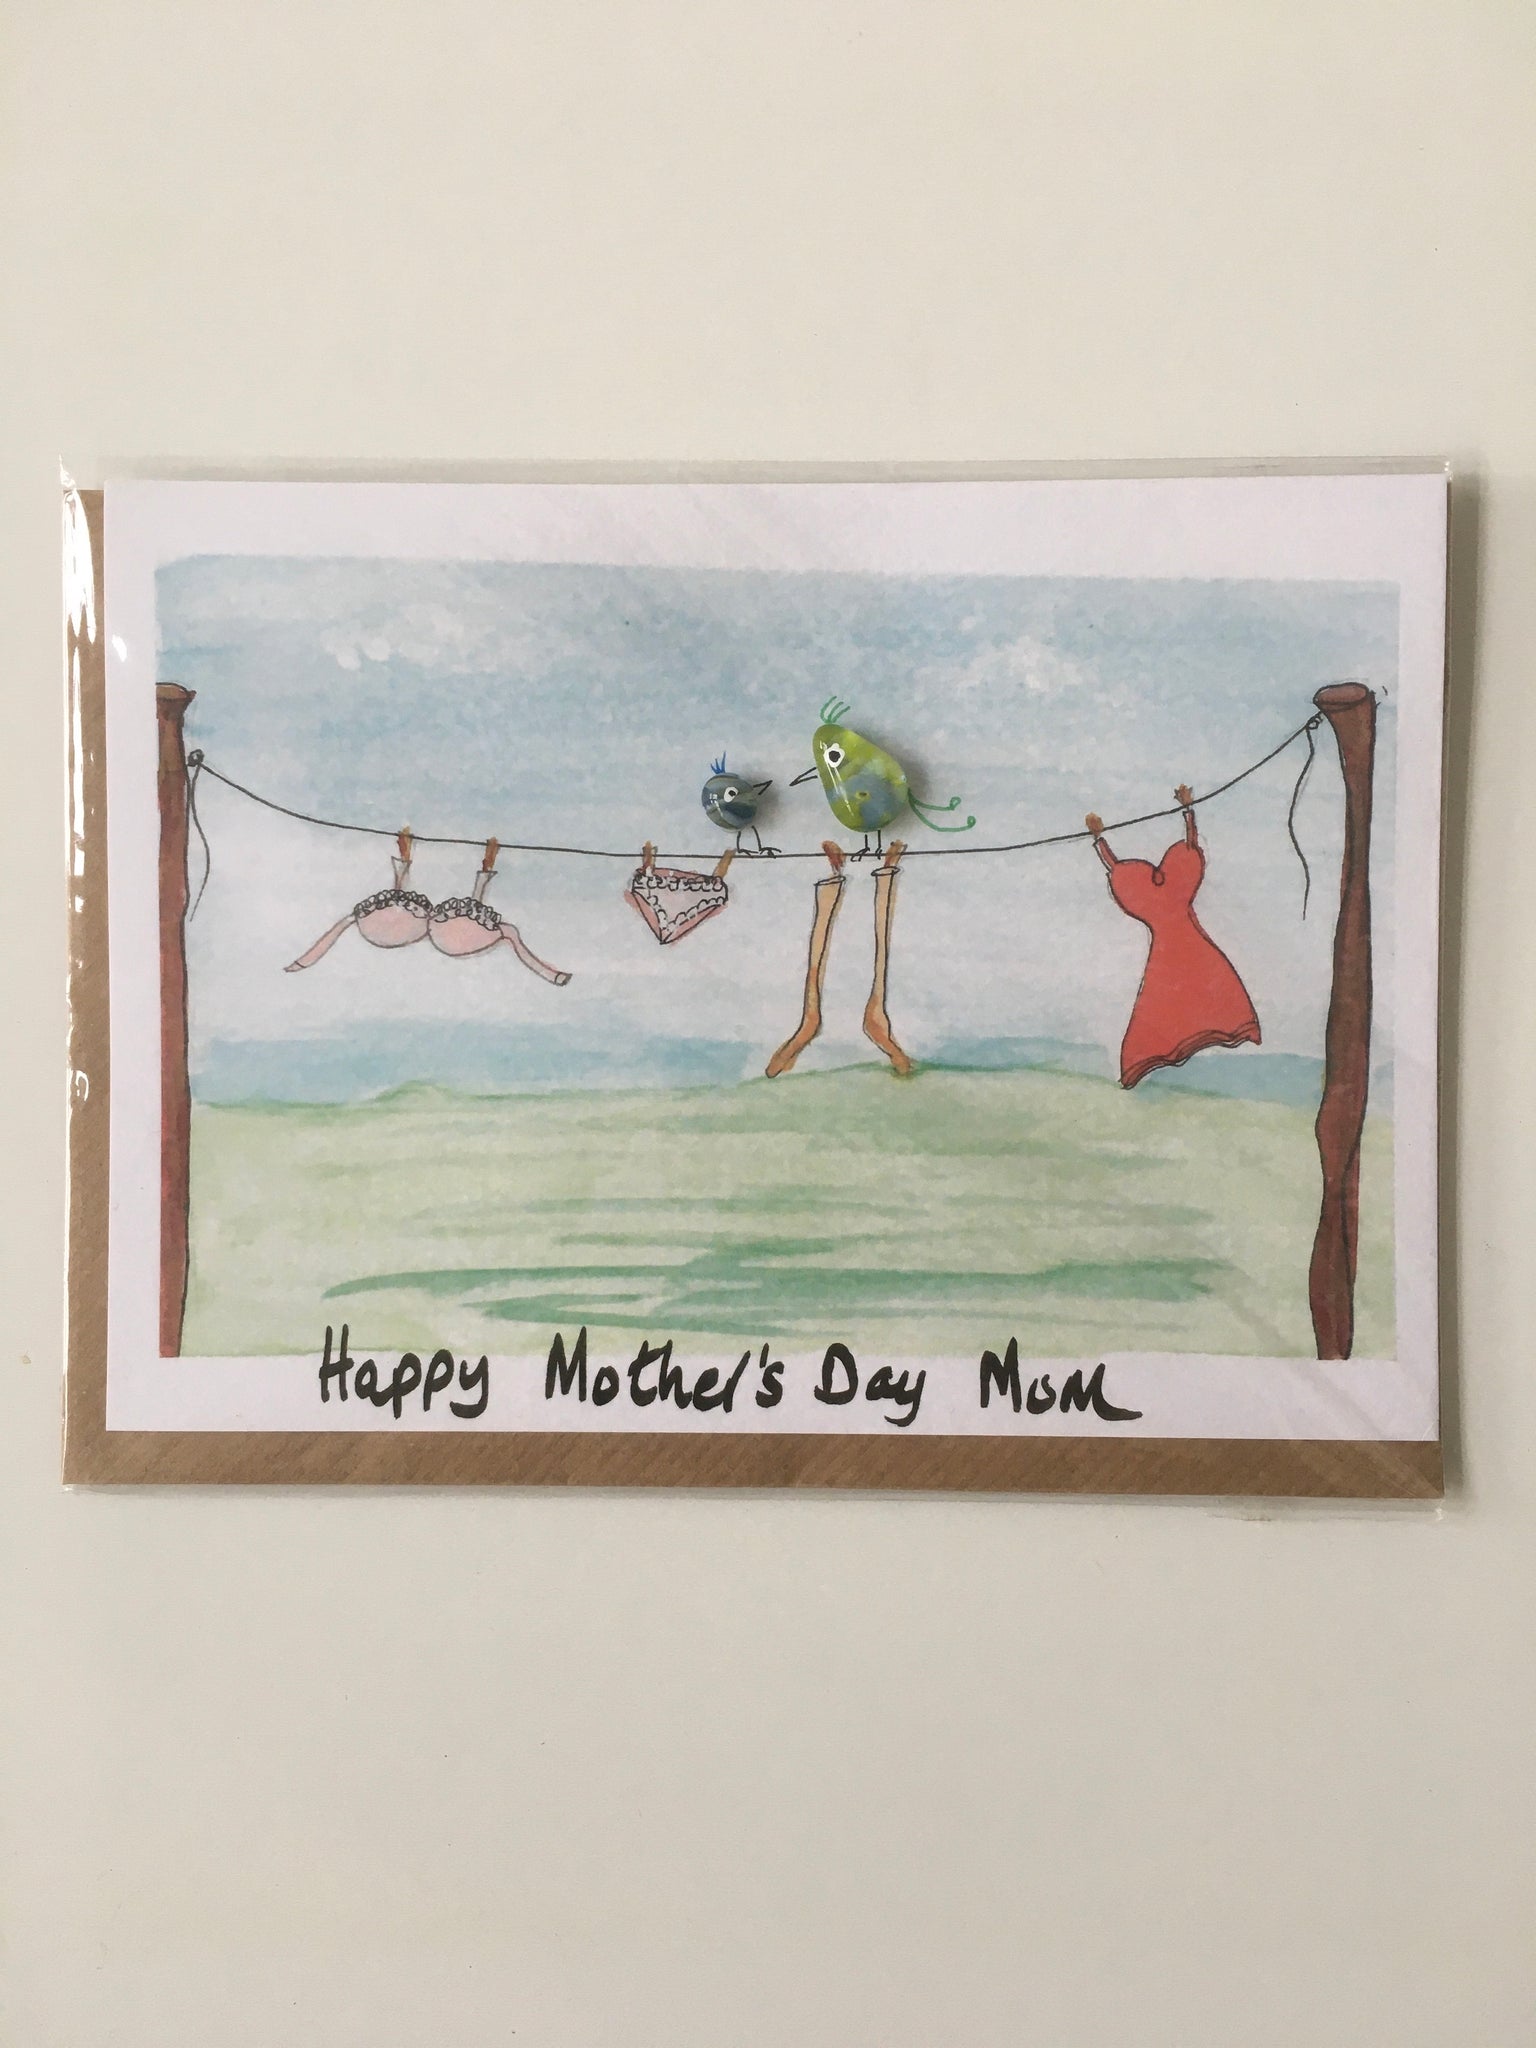 Happy Mother’s Day mum